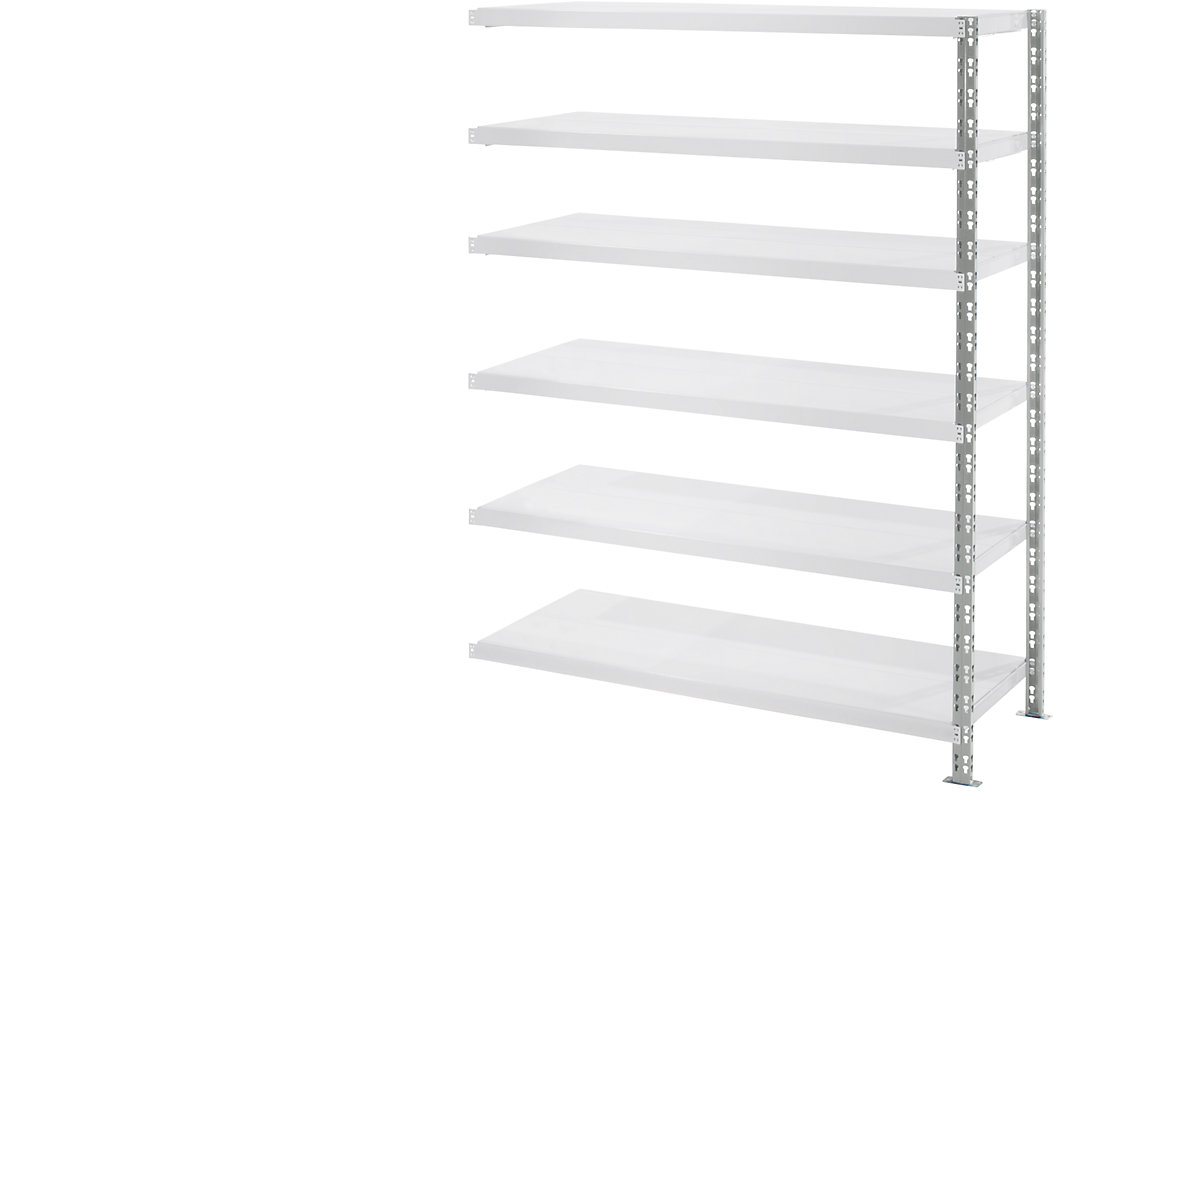 Wide span shelf unit with sheet steel shelves, depth 700 mm, extension shelf unit, HxW 1976 x 1525 mm